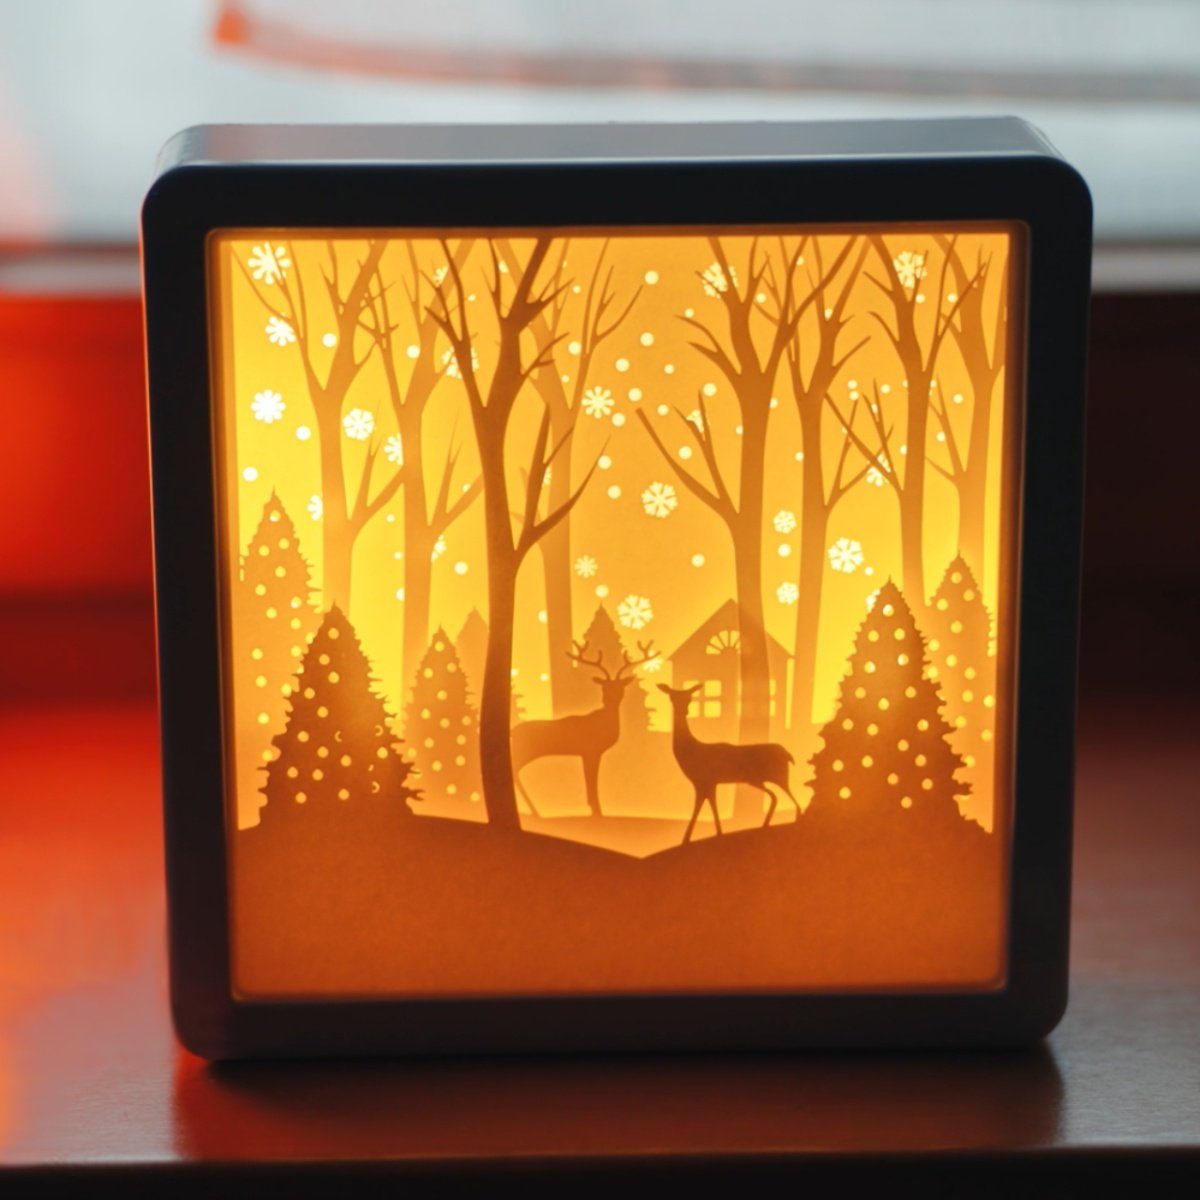 Shadowbox, Nachtlicht, Warmweiß, Woodland, CiM fest kabellose SQUARE- LED 16x5x16cm, integriert, Snowy Papercut Dekoration Lichtbox Wohnaccessoire, 3D LED